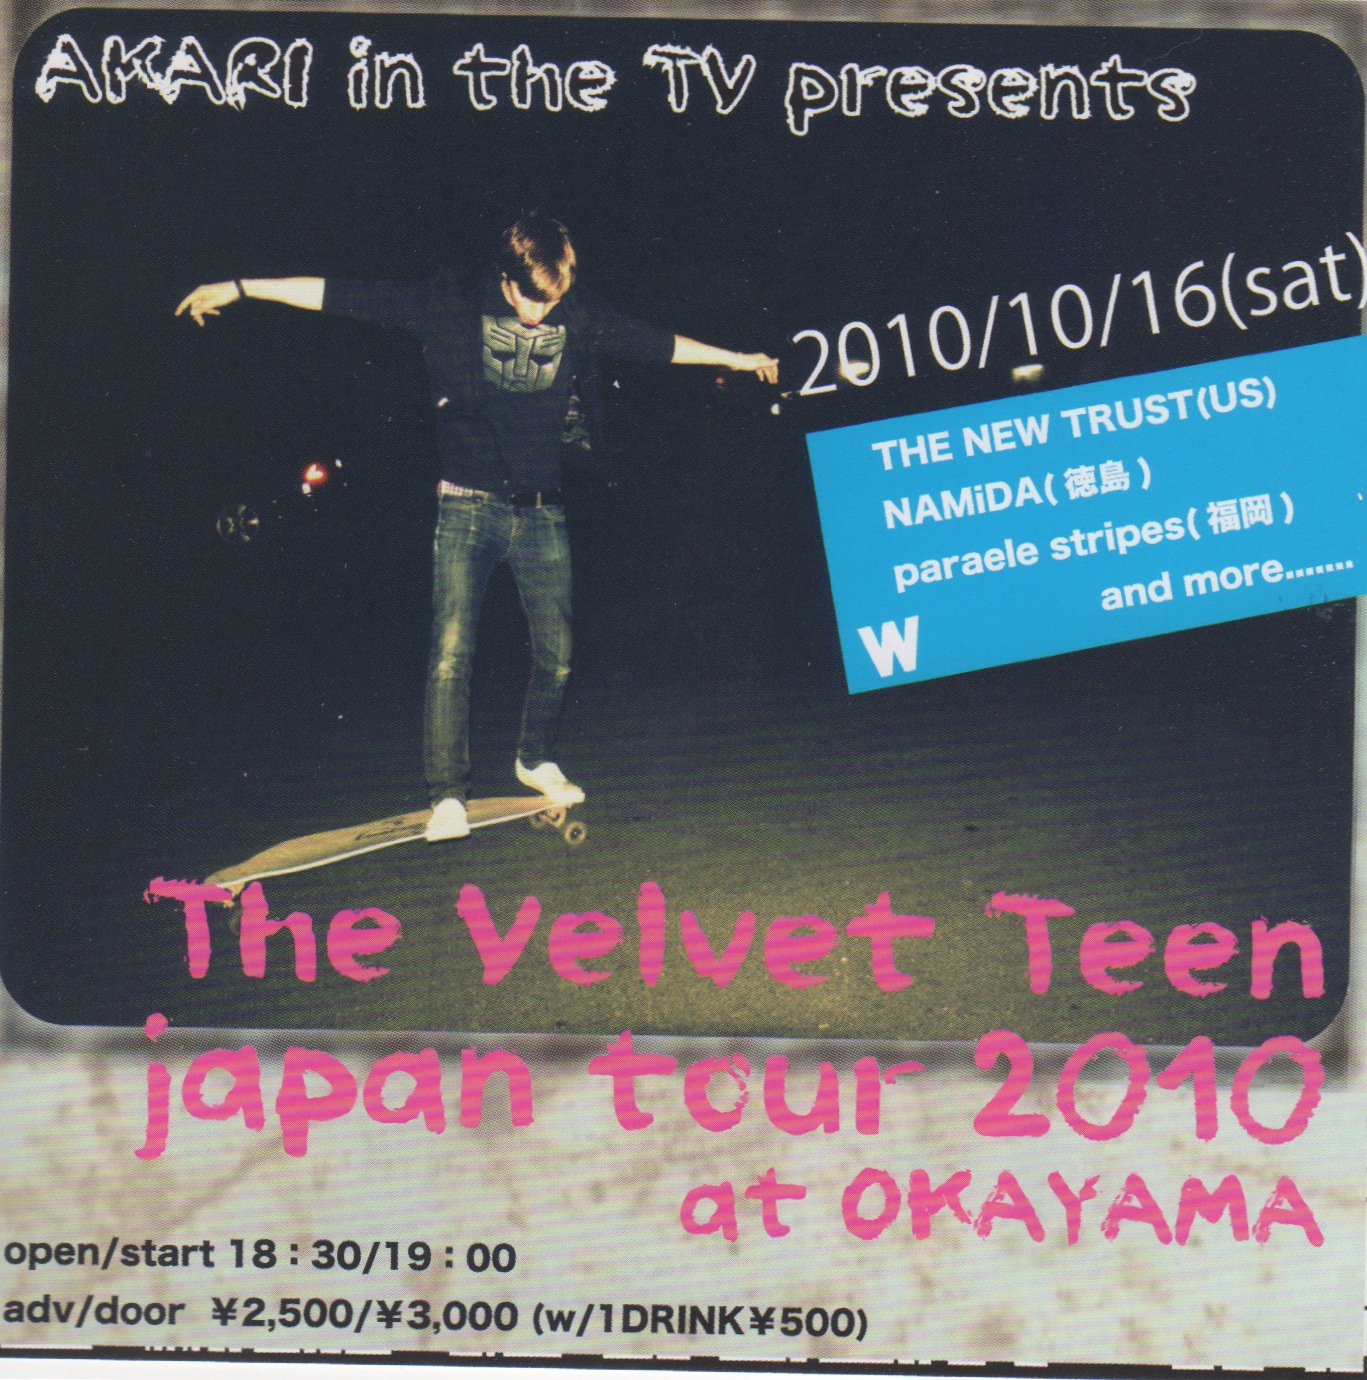 The Velvet Teen japan tour 2010 at OKAYAMA